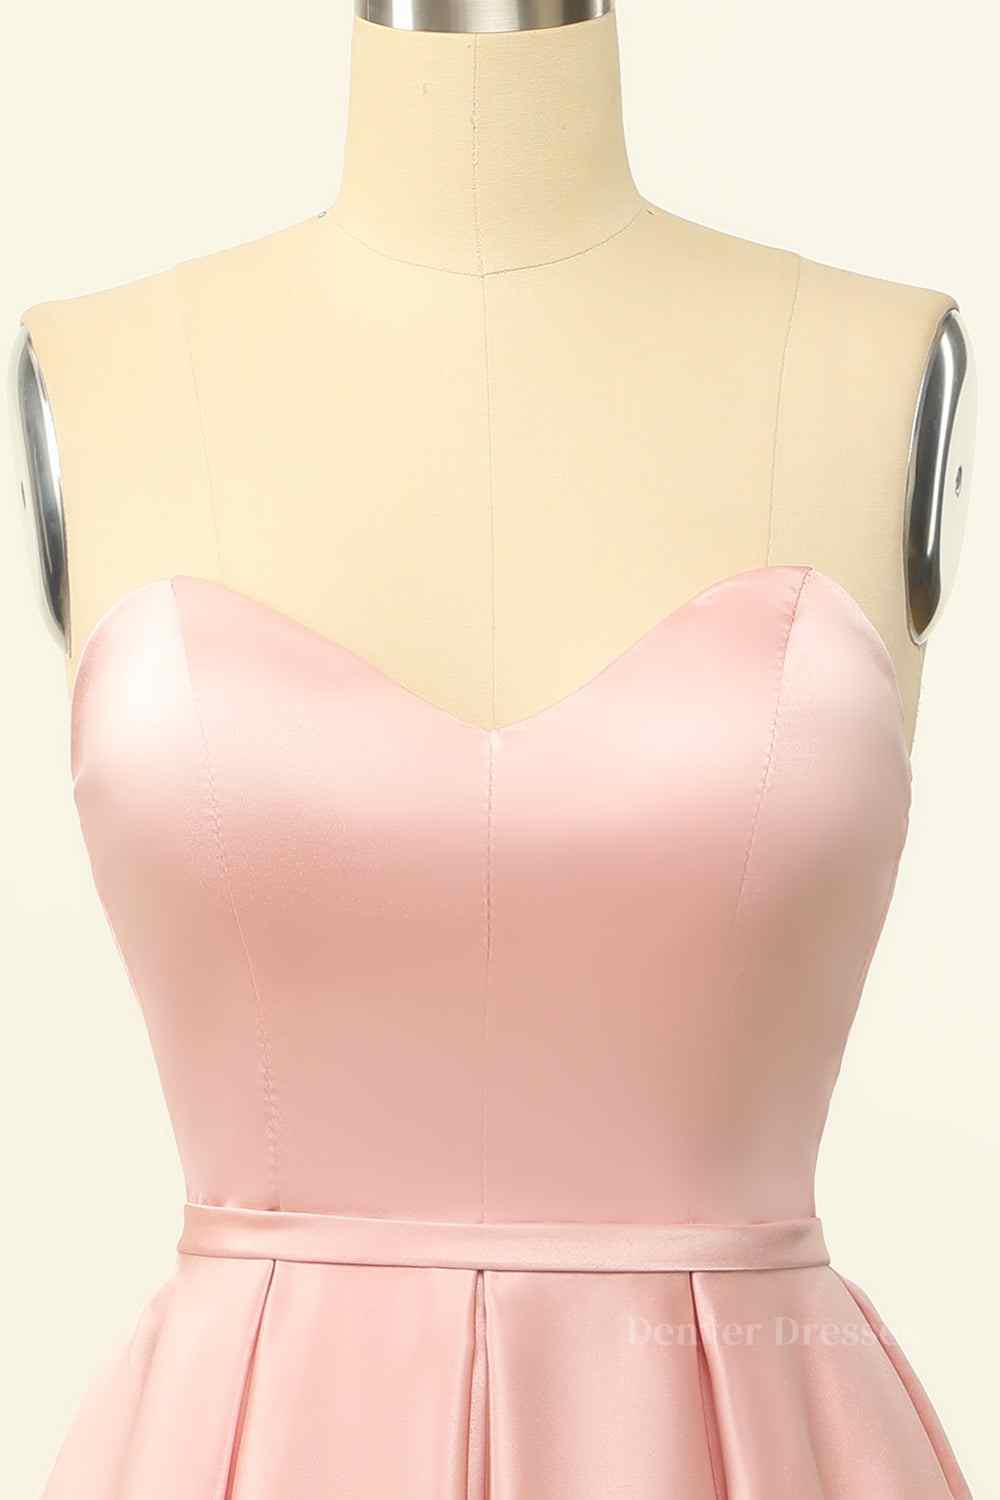 Gorgeou Dress, Pink A-line Strapless Satin Lace-Up Back Mini Homecoming Dress